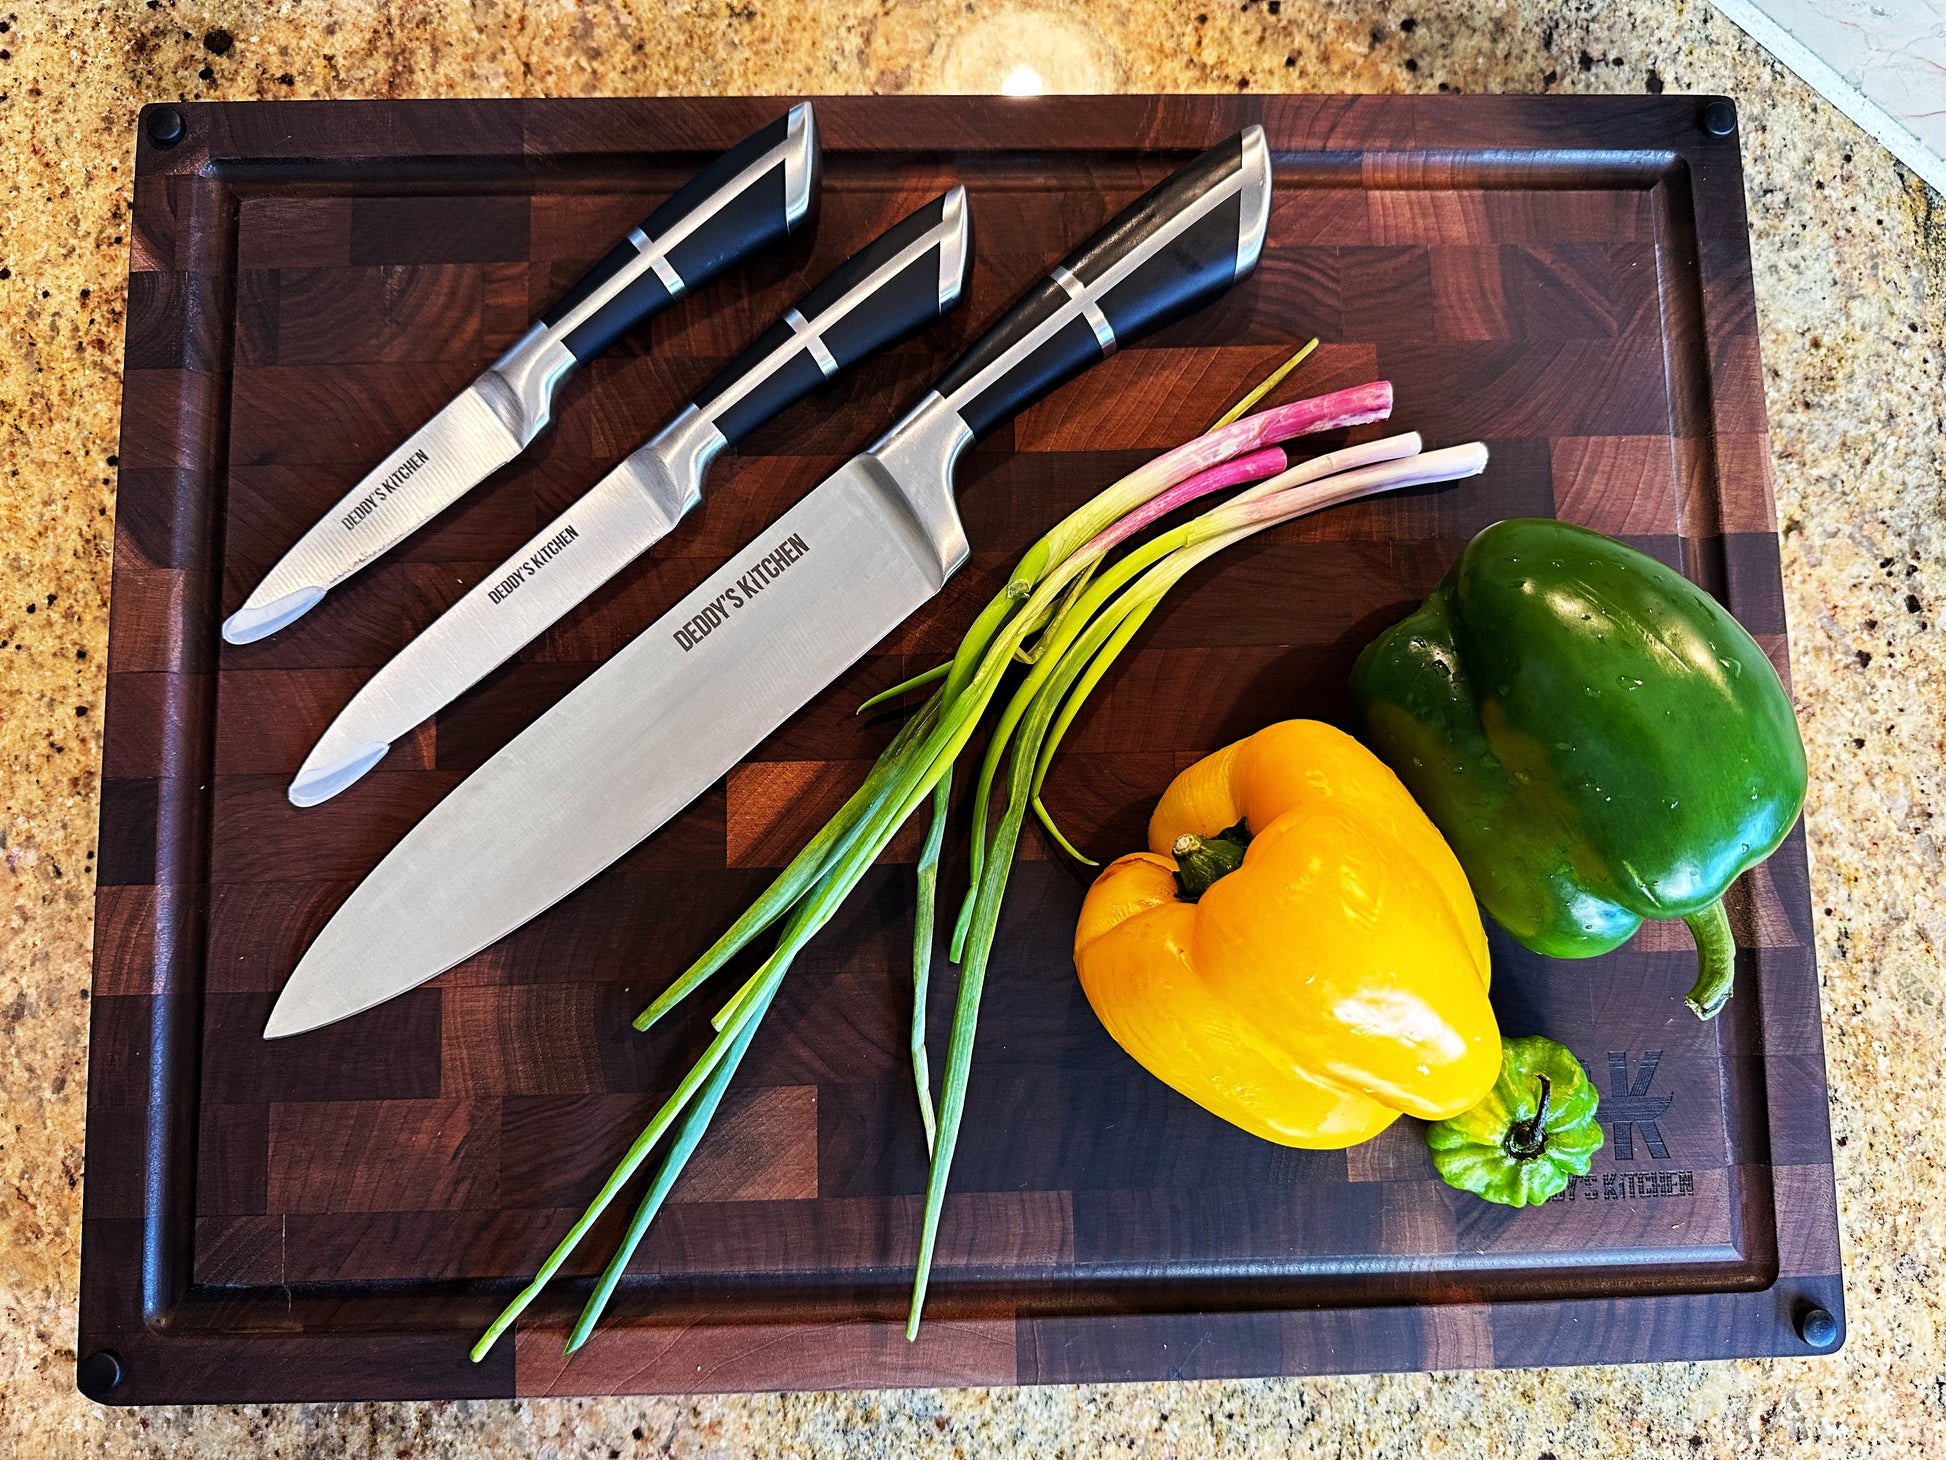 9-Piece Bundle Master Chef Knife Set + Stainless Steel Block